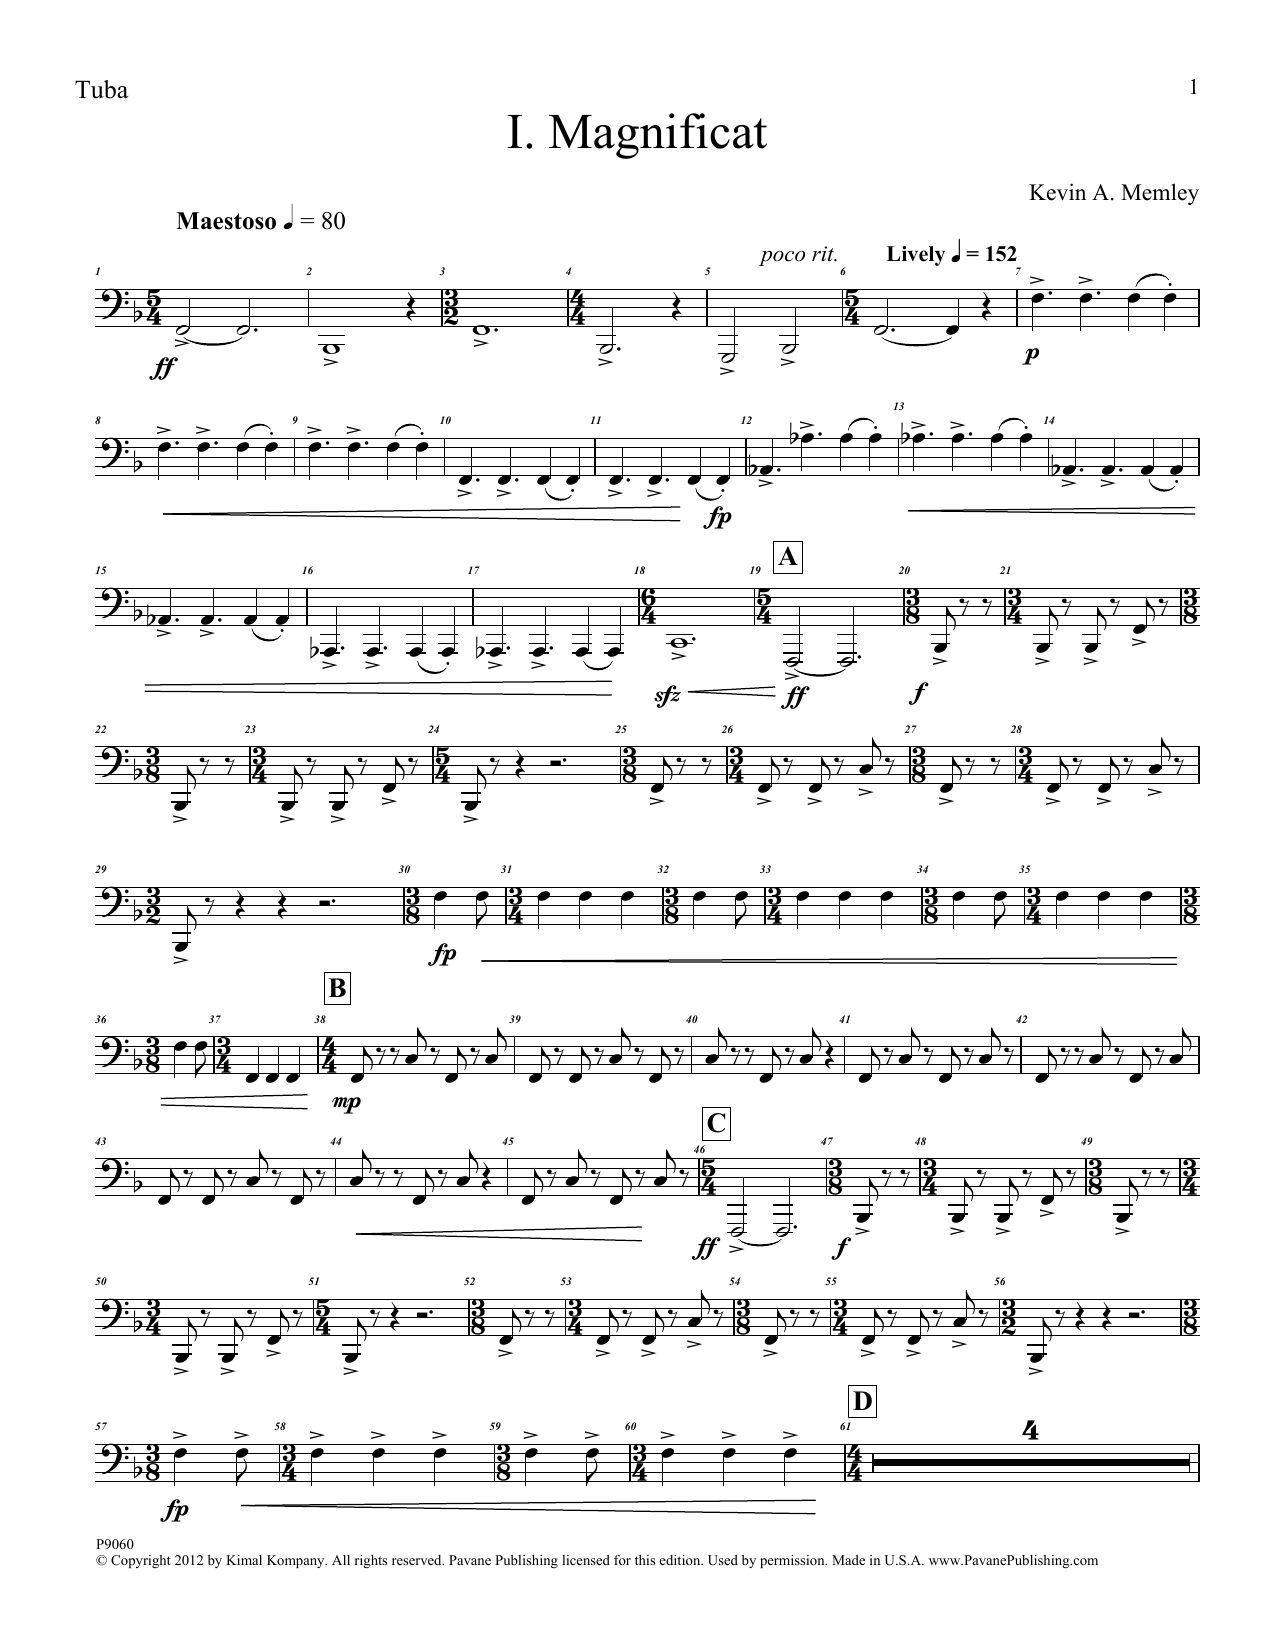 Kevin Memley Magnificat (Brass Quintet) (Parts) - Tuba Sheet Music Notes & Chords for Choir Instrumental Pak - Download or Print PDF